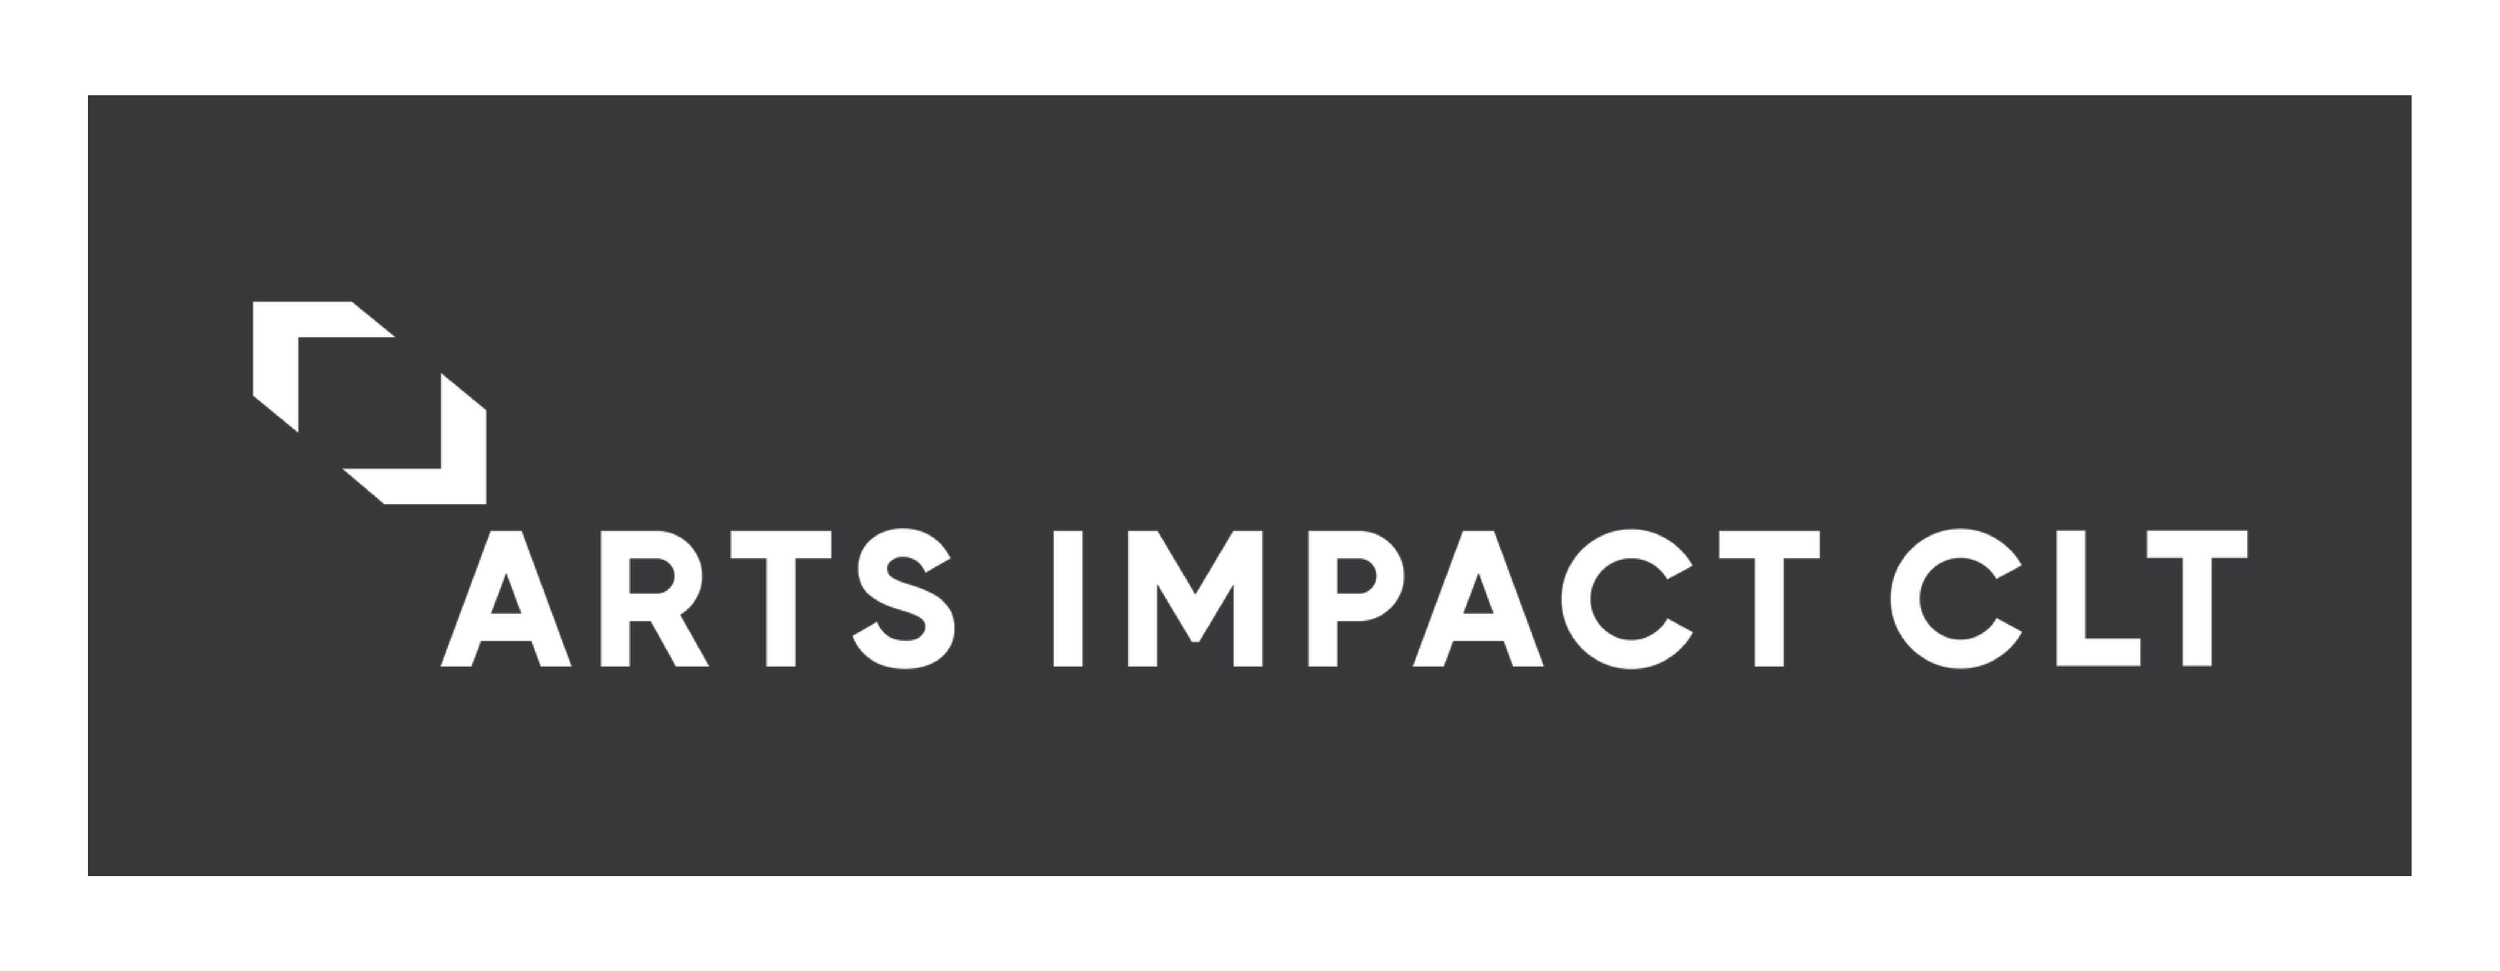 arts impact clt partners scale-1-39.png